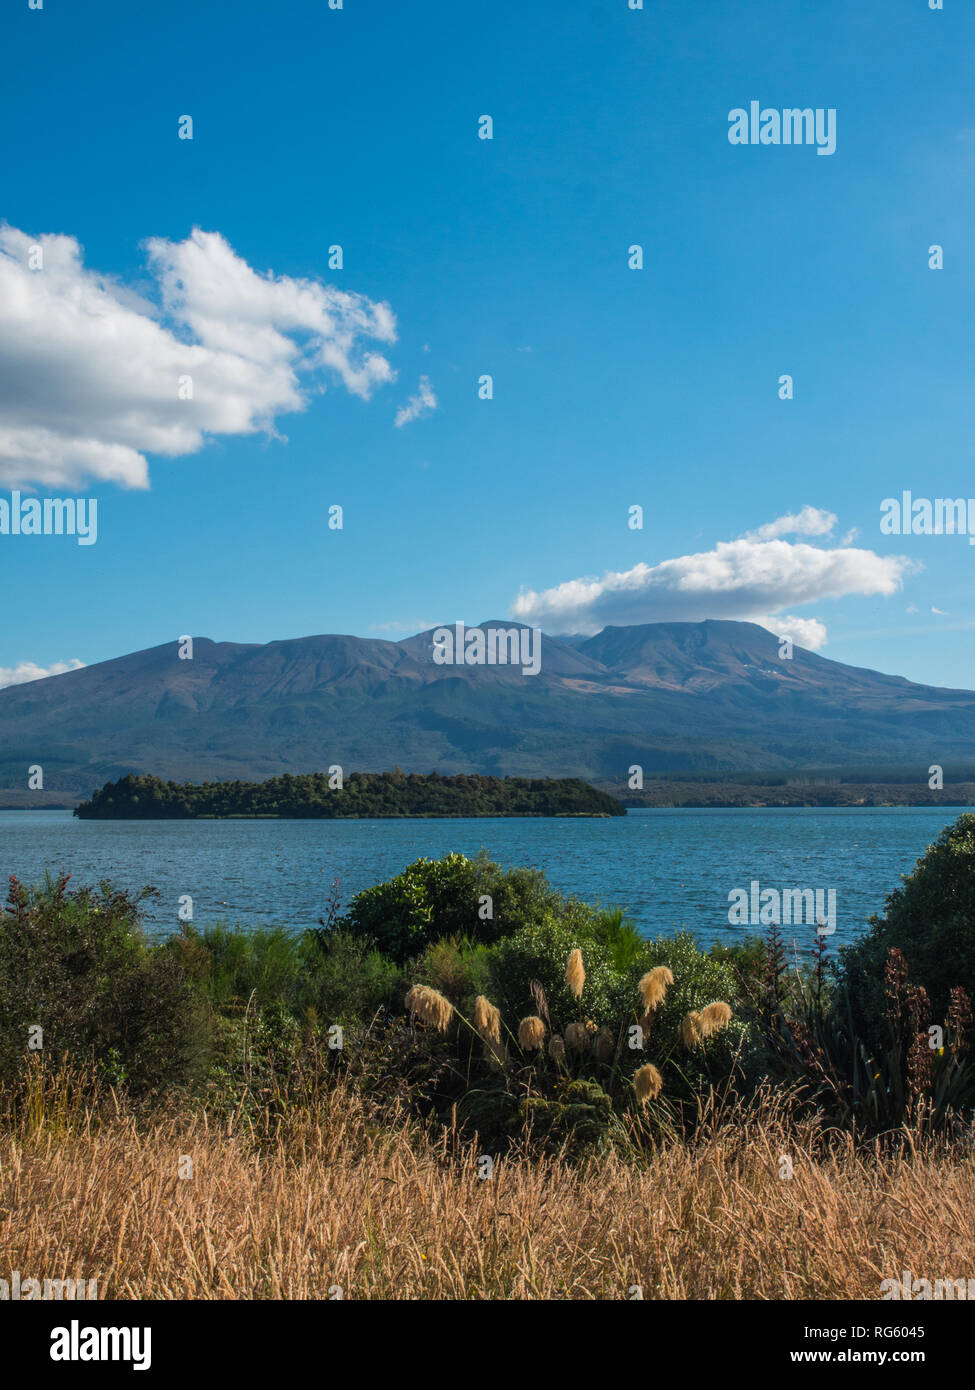 Isla Motuopuhi, visto desde Opotaka histórico sitio de asentamiento Maorí, Lago Rotoaira, Tongariro, Nueva Zelanda Foto de stock